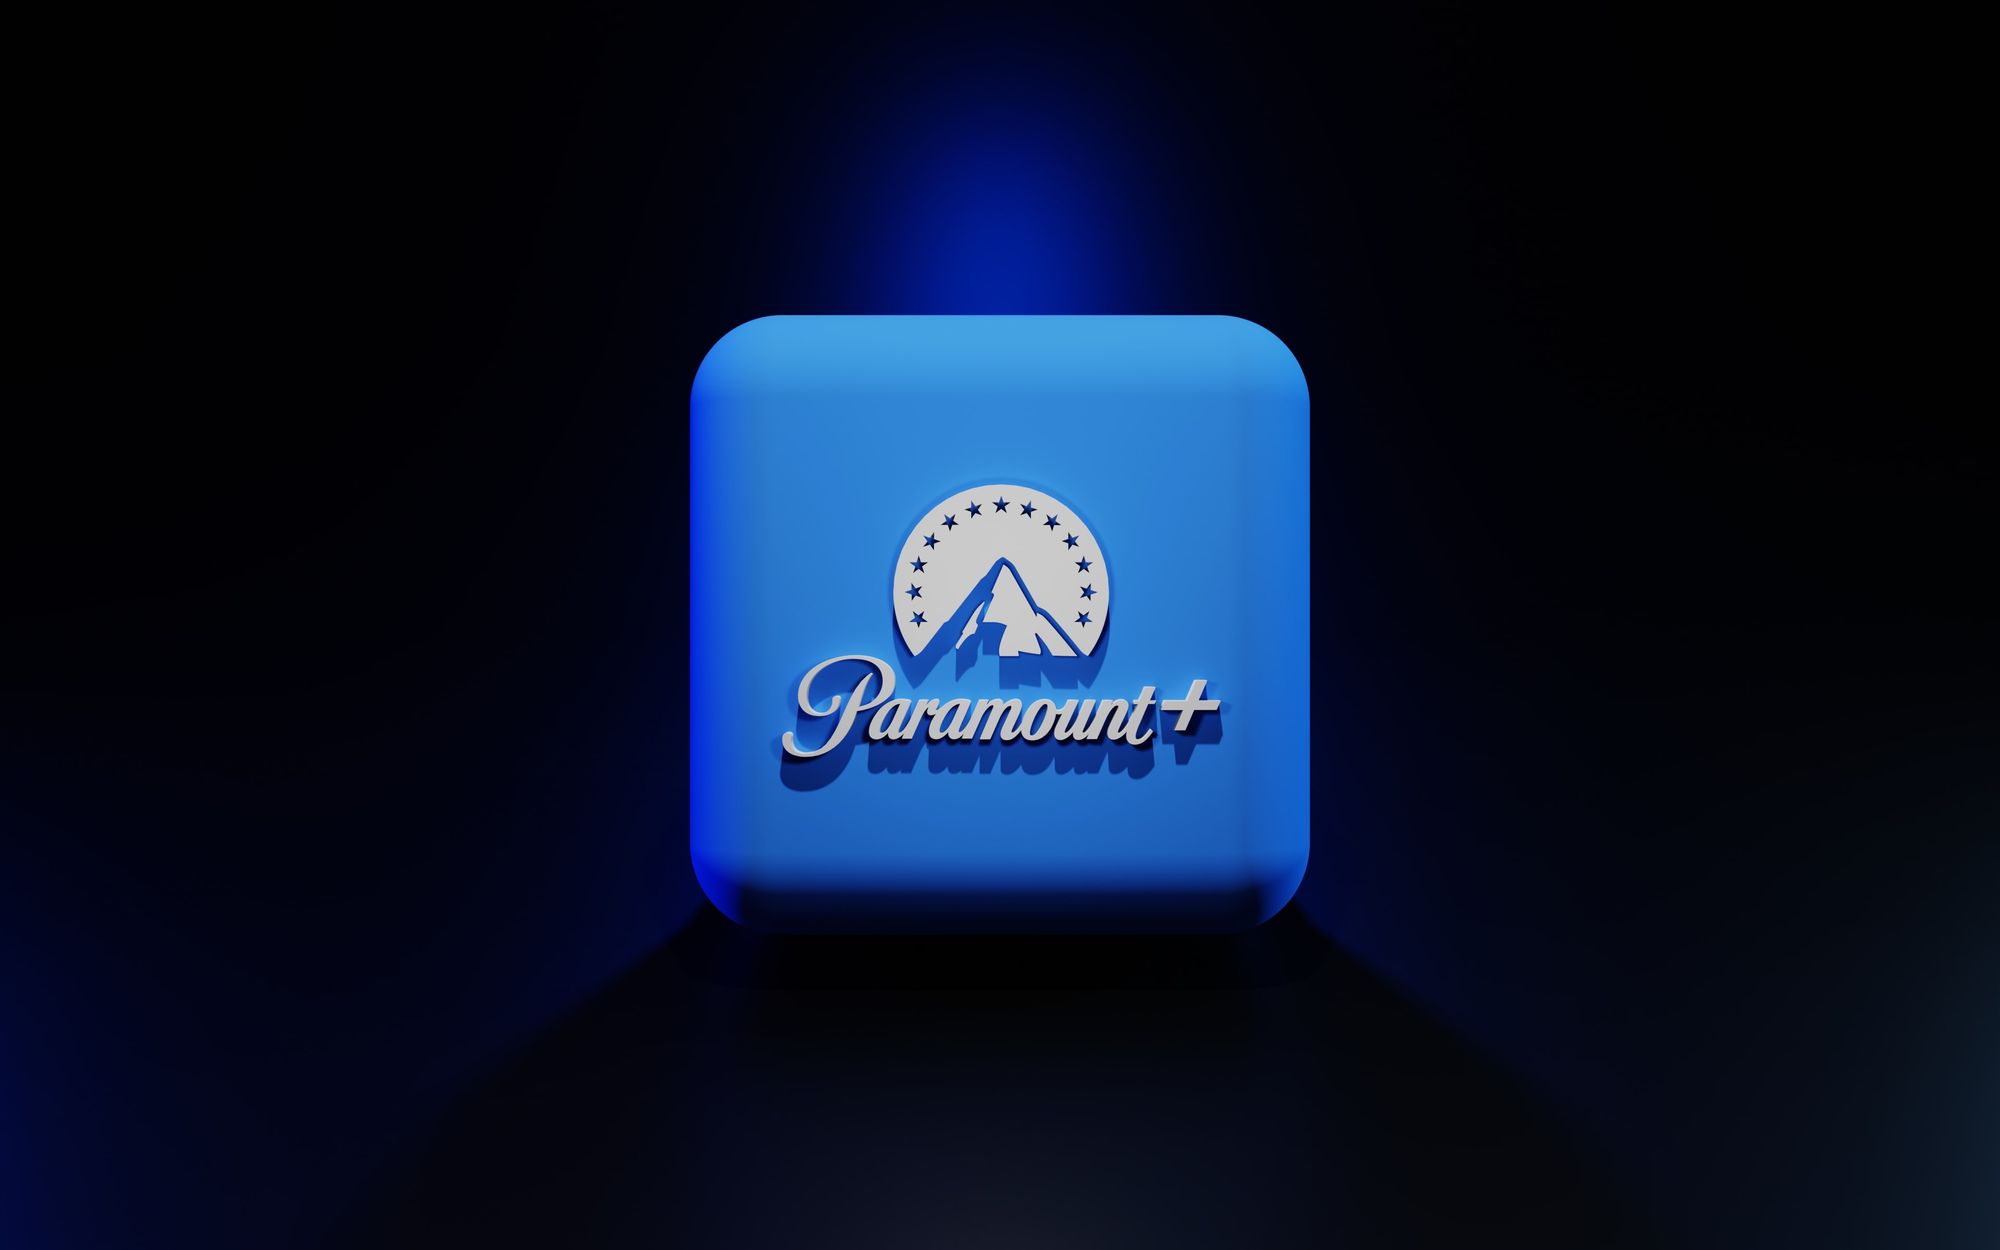 Streaming Wars: Paramount+ Climbs Apple’s Top Charts